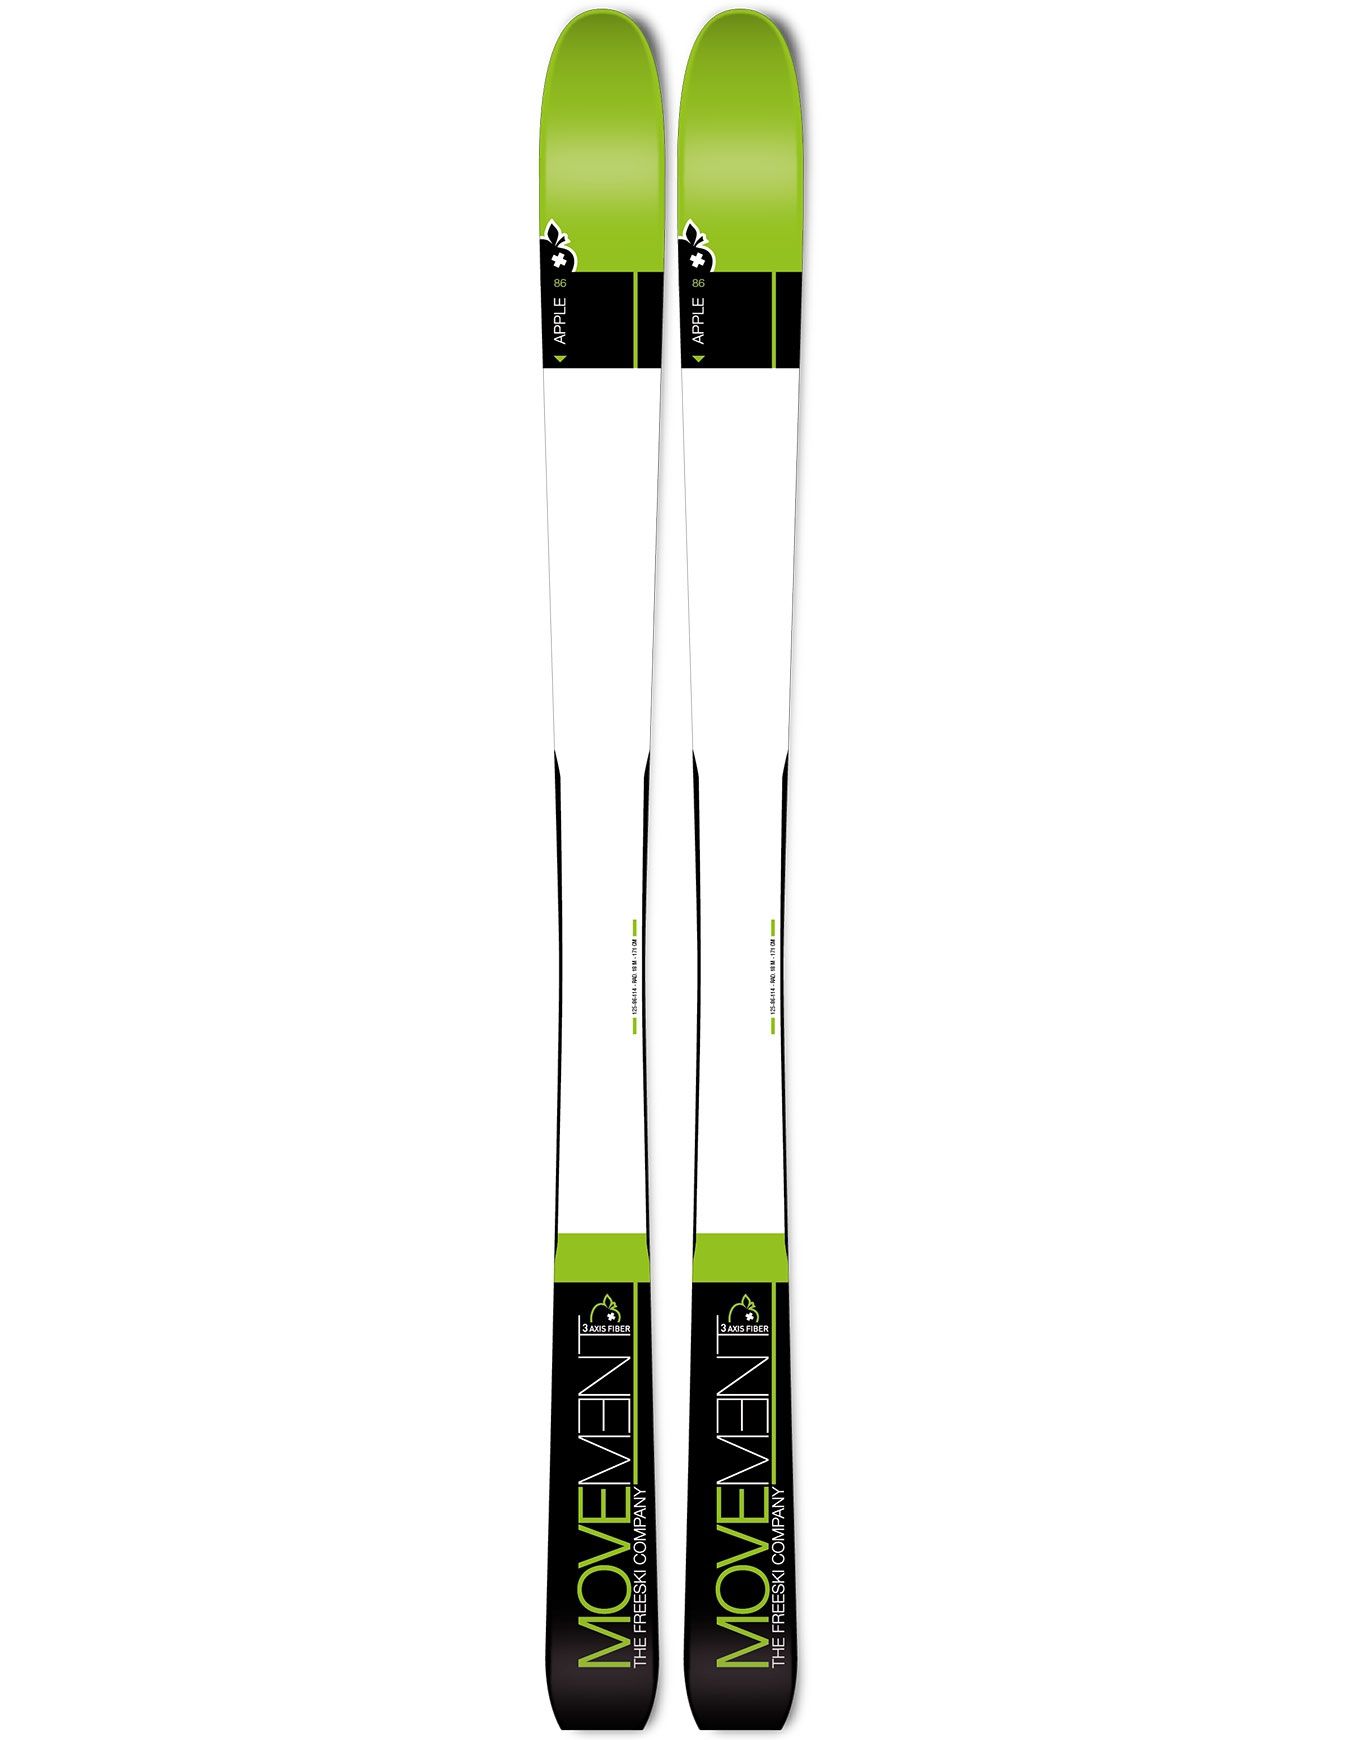 Ski Apple 86 2020